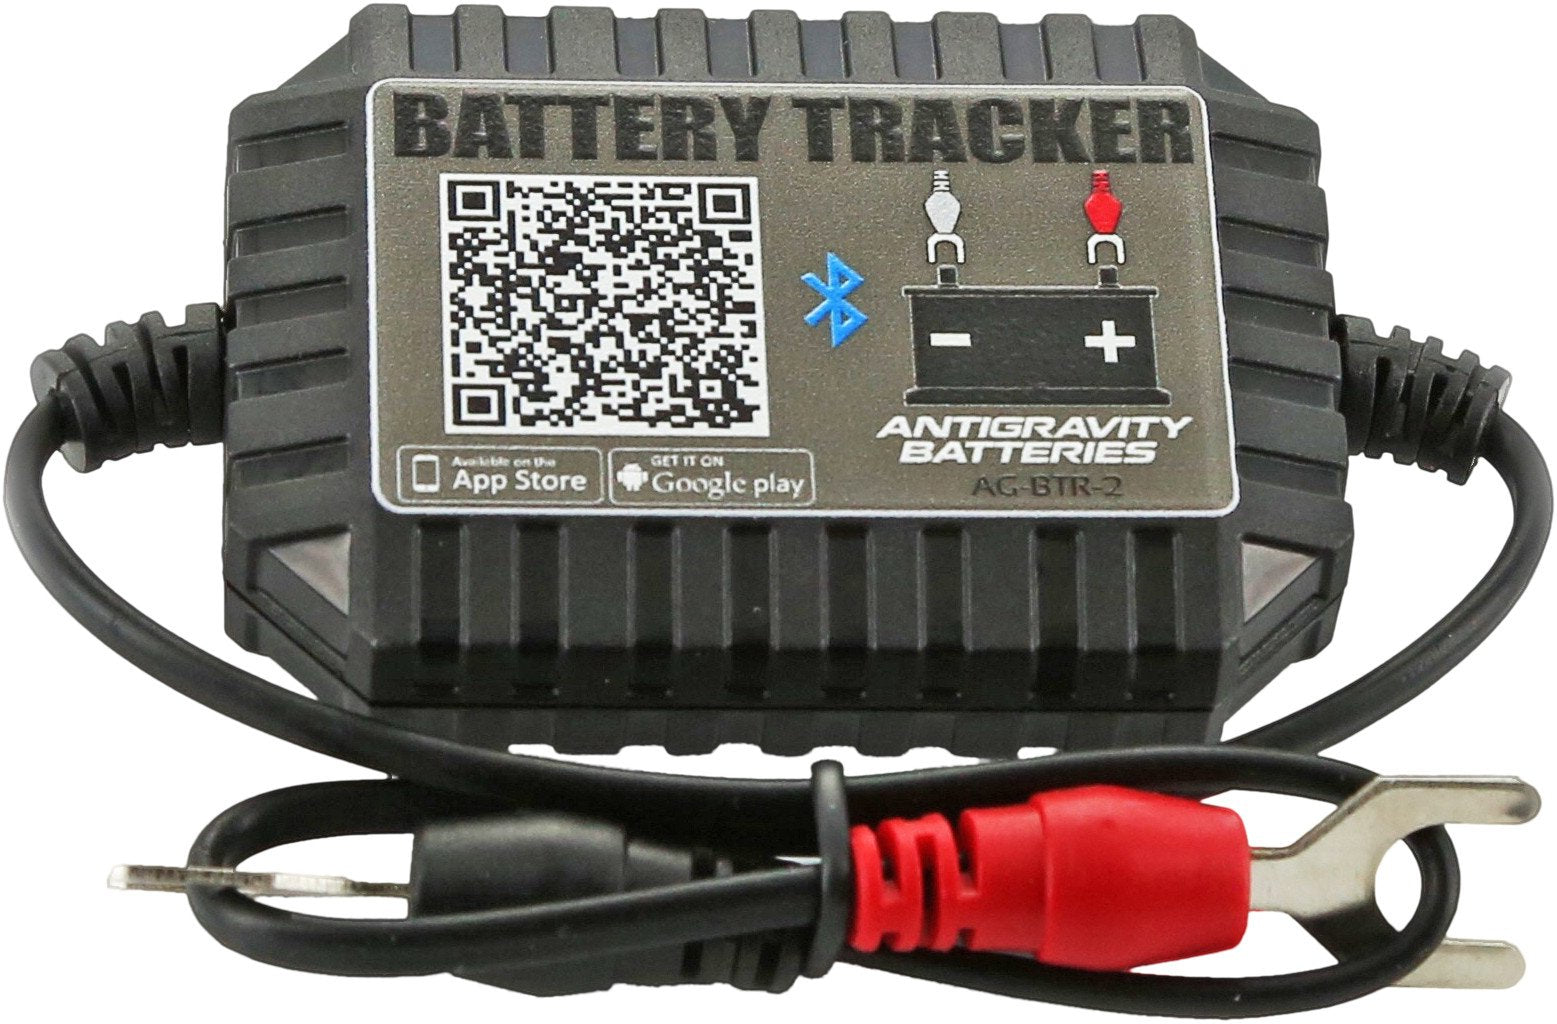 antigravity battery tracker